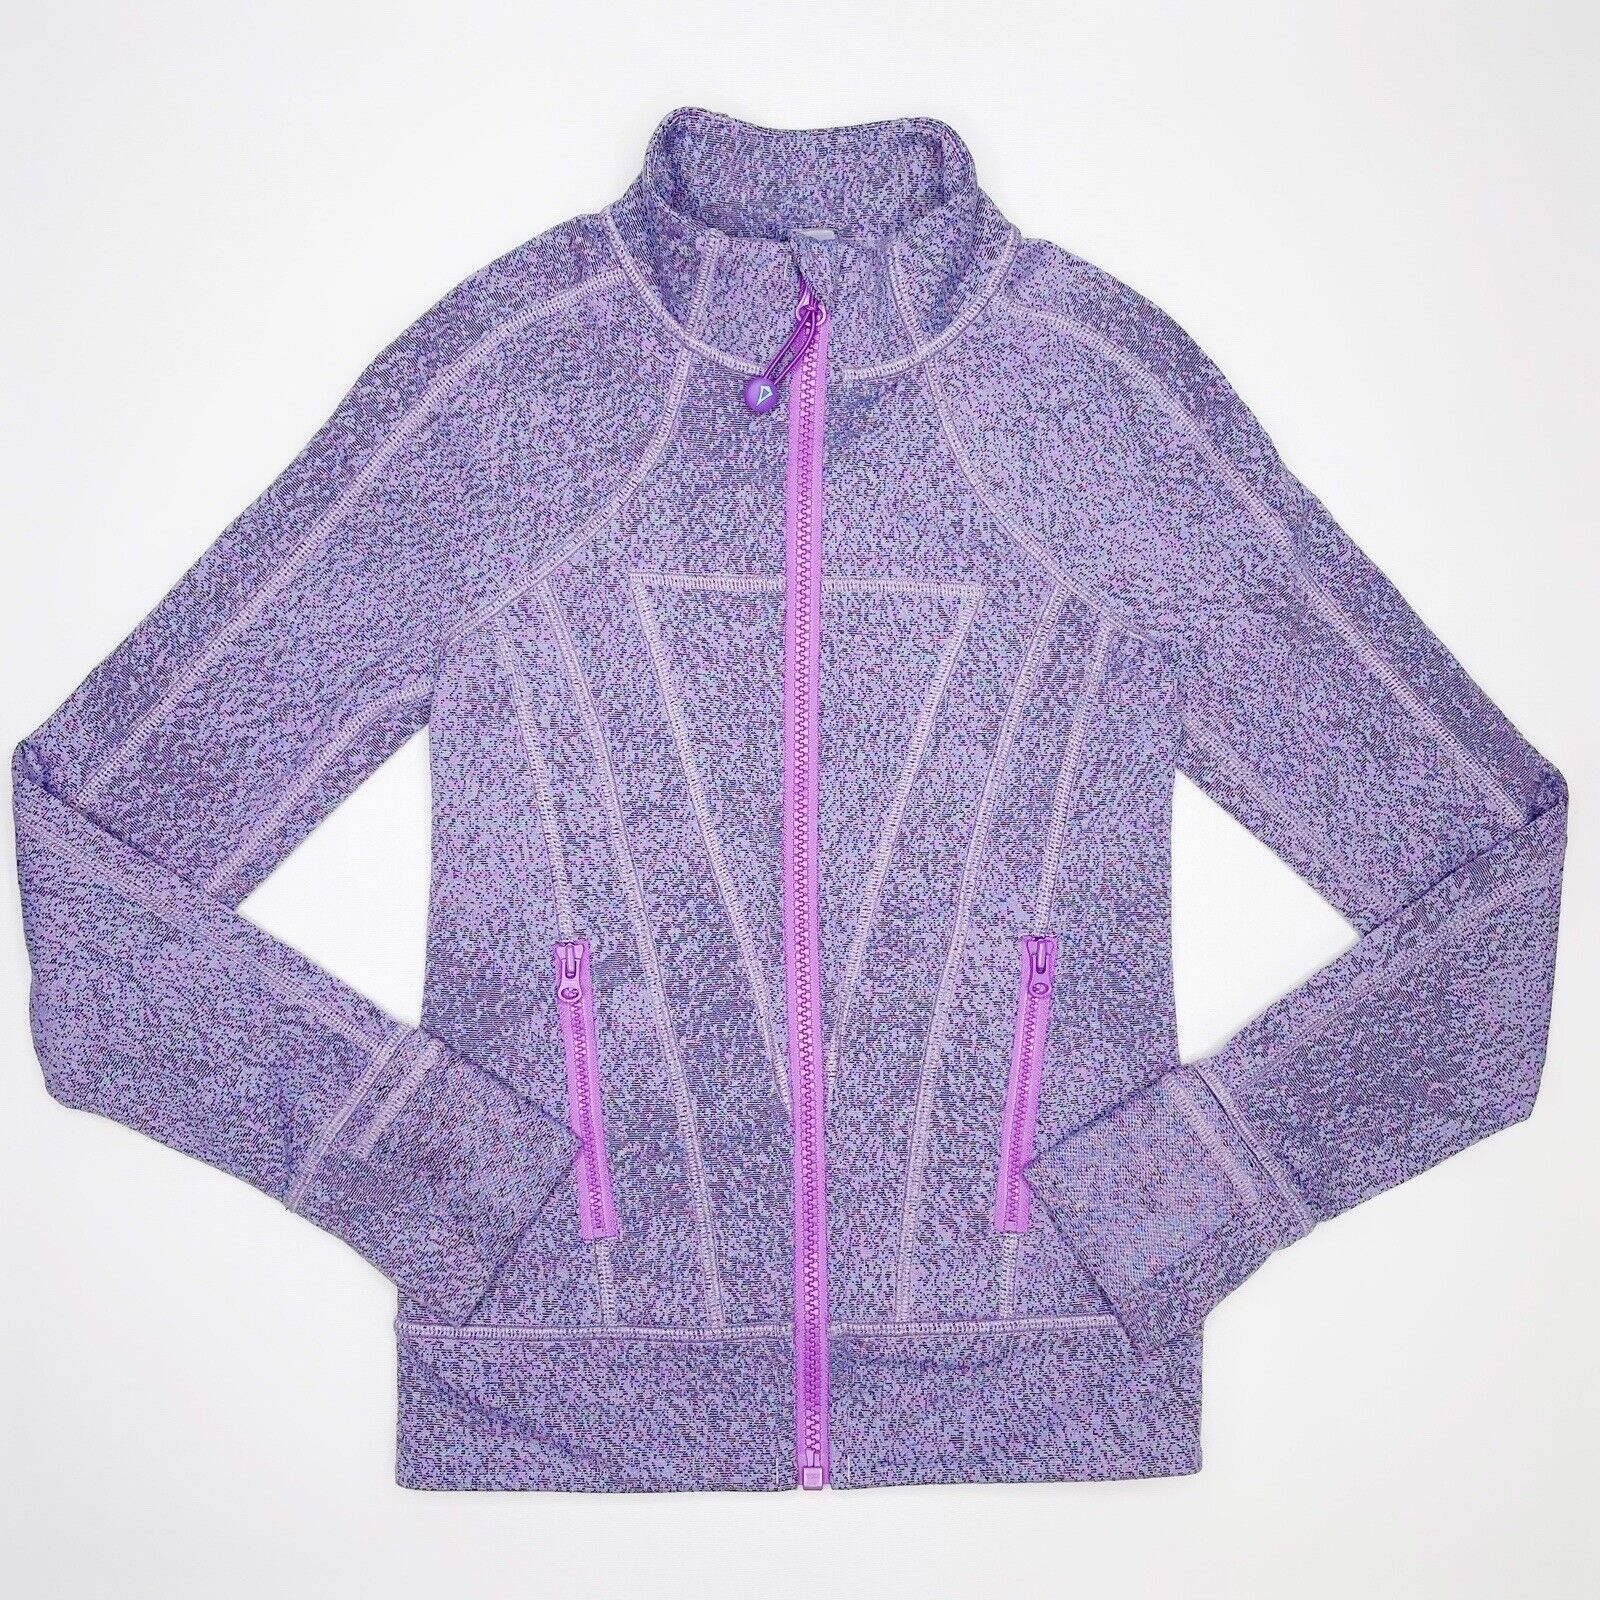 Ivivva Lululemon Perfect Your Practice Full Zip Purple Jacket Girl's Size 6